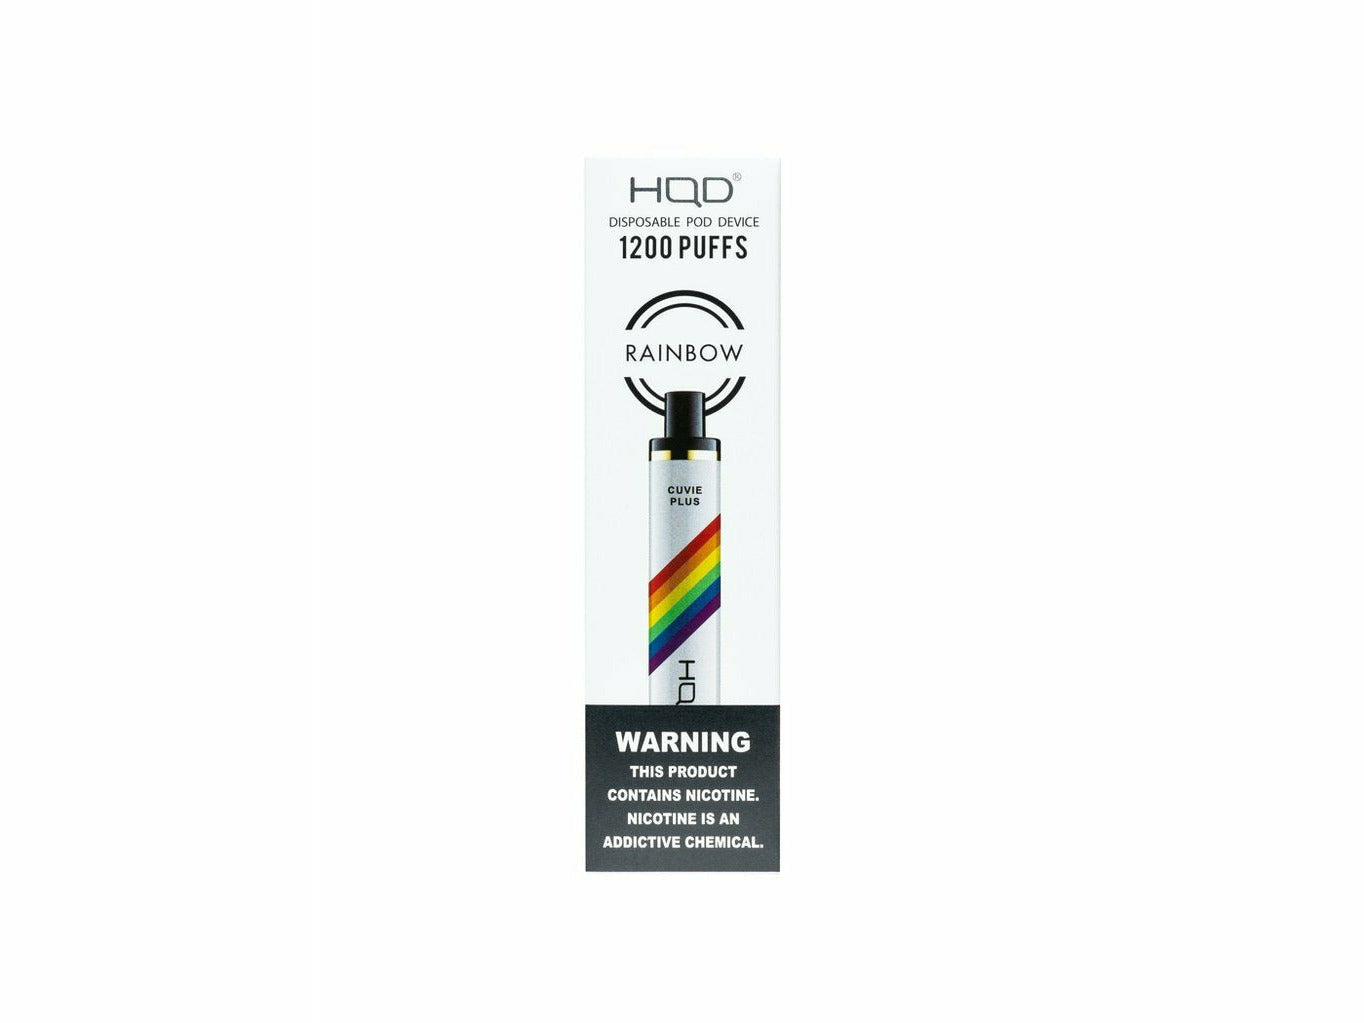 HQD Cuvie Plus Rainbow Flavor disposable vape device box